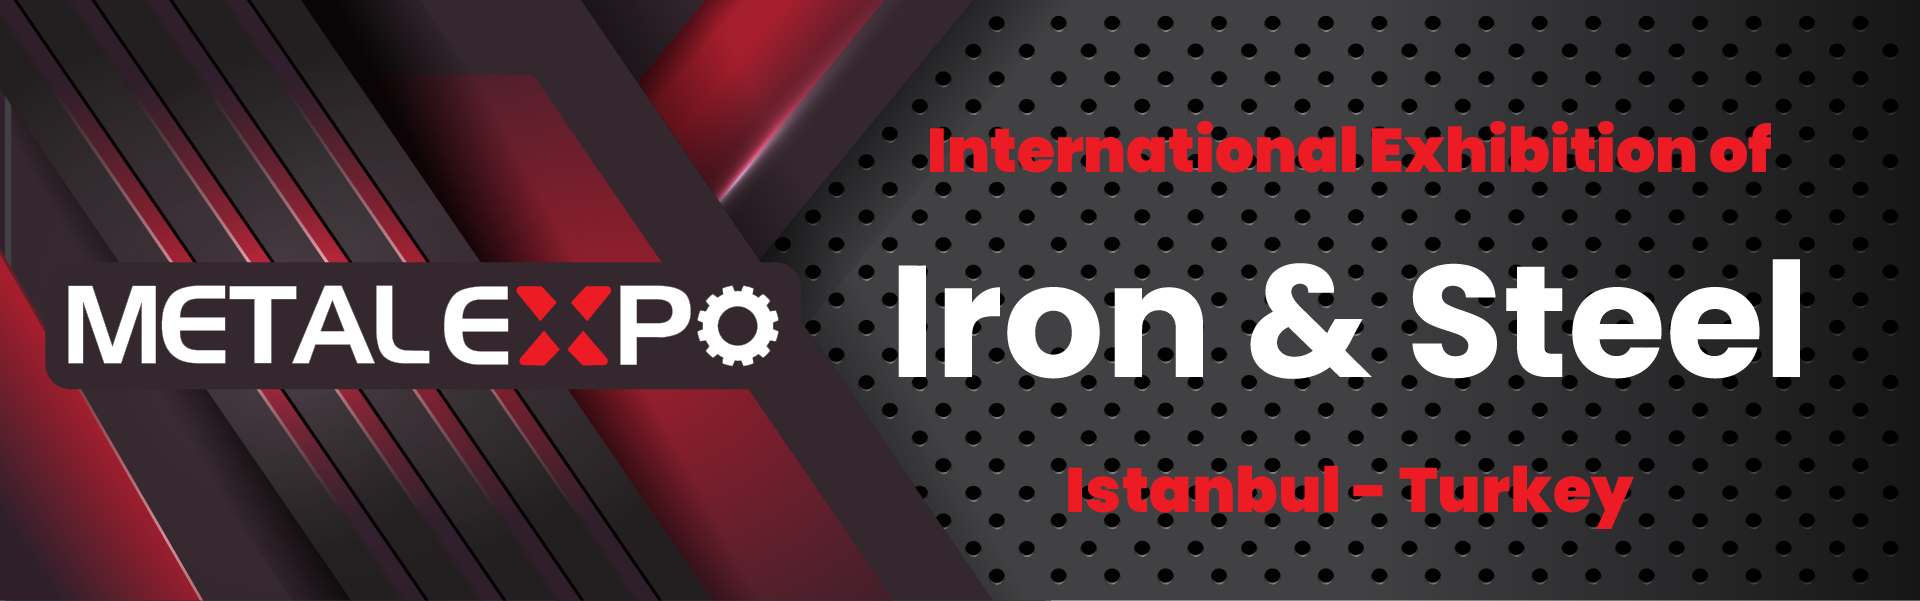 Iron and Steel Exhibition Turkey Istanbul